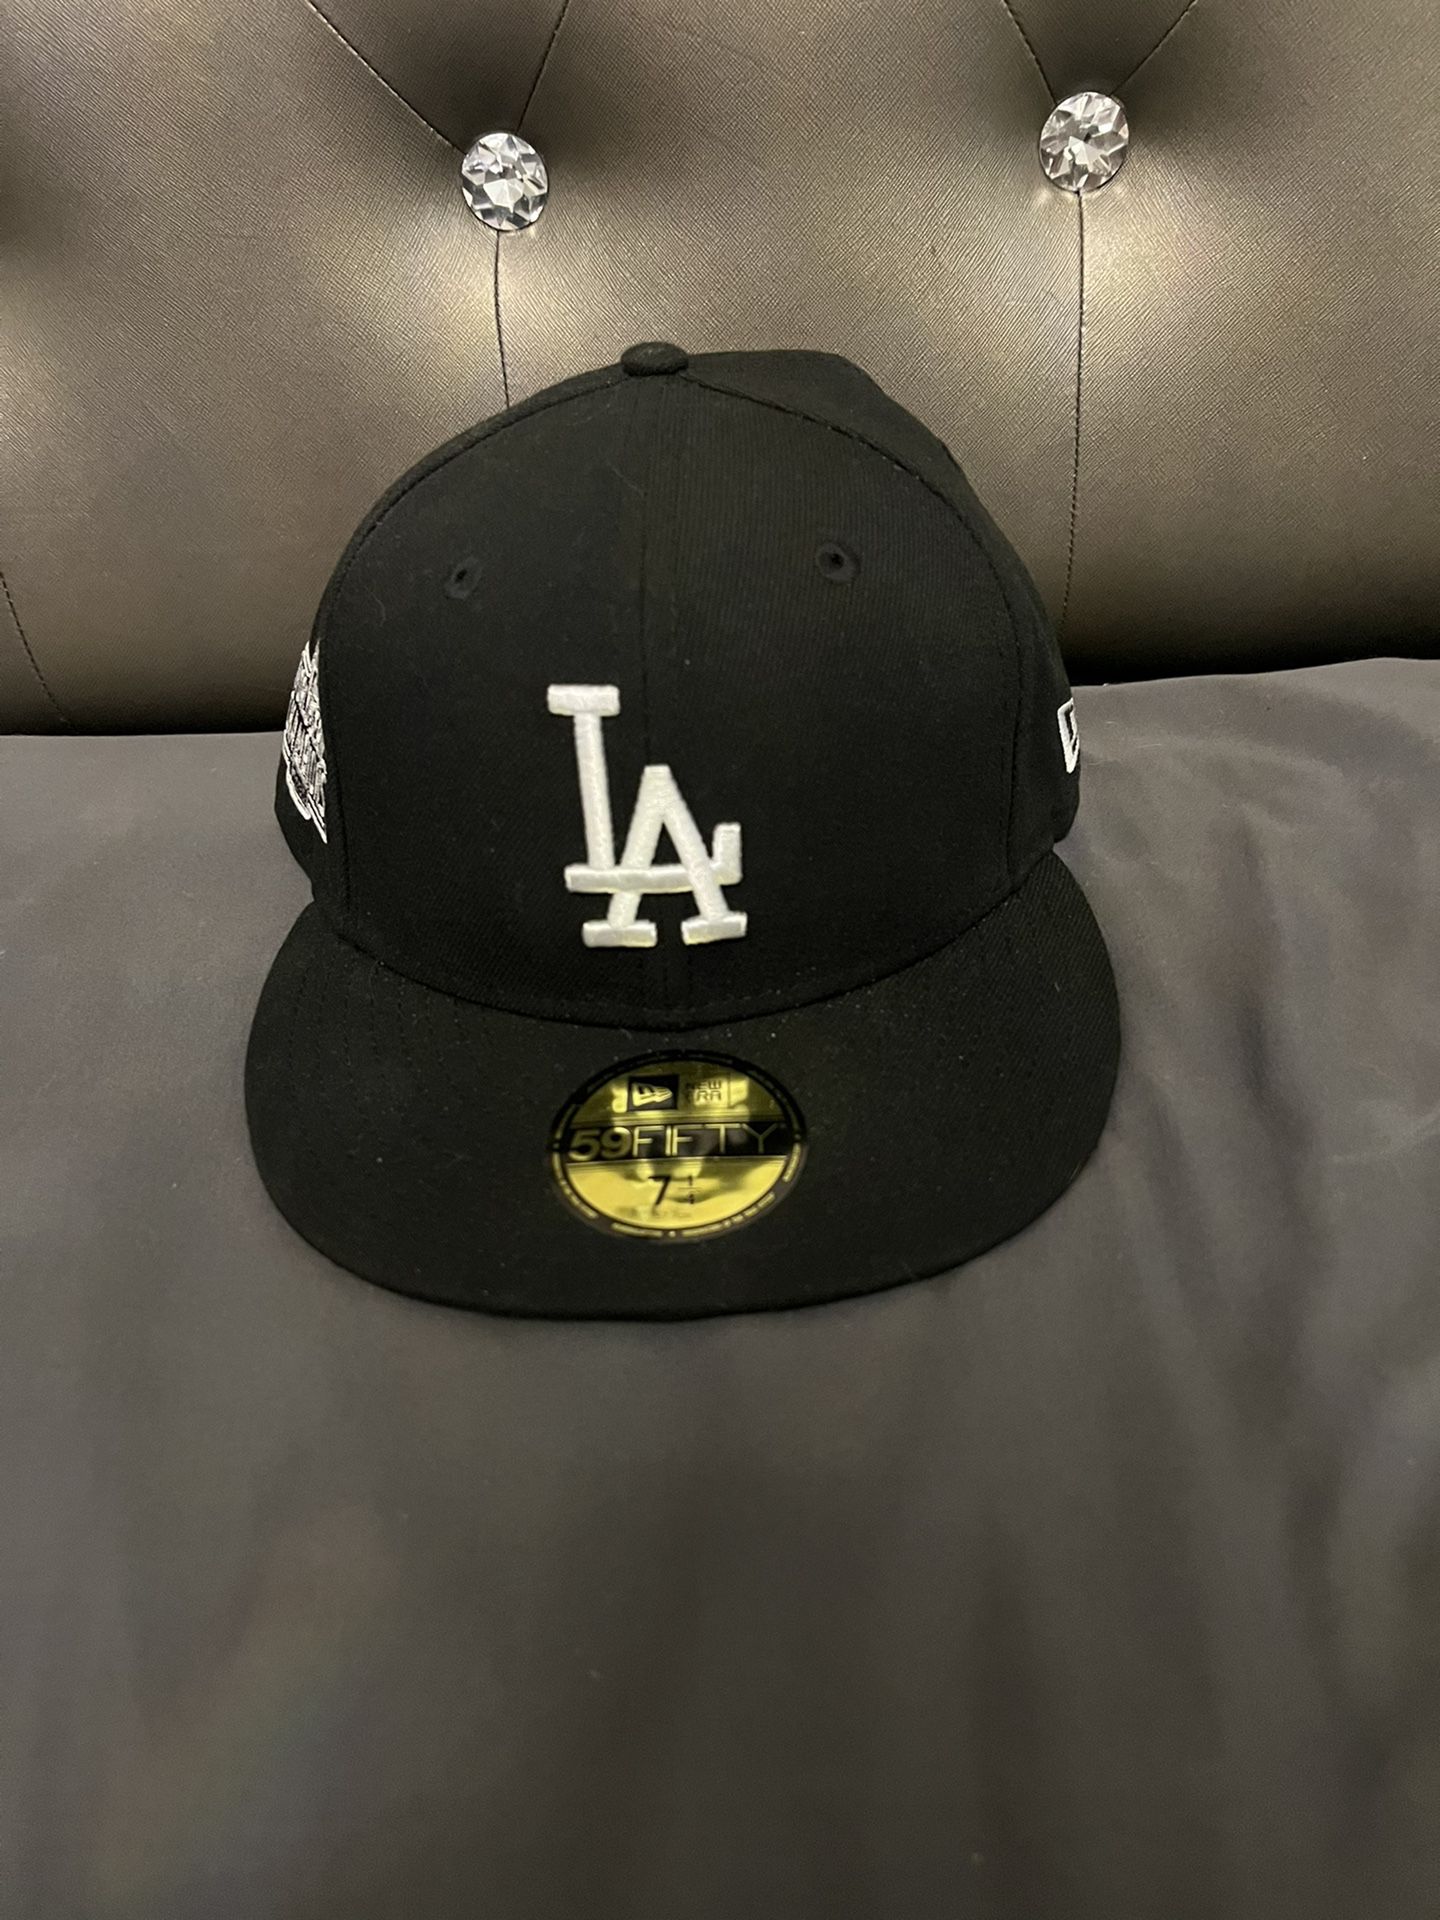 New Era Los Angeles LA Dodgers World Champs Side Patch 59FIFTY Hat Black Size 7 1/4